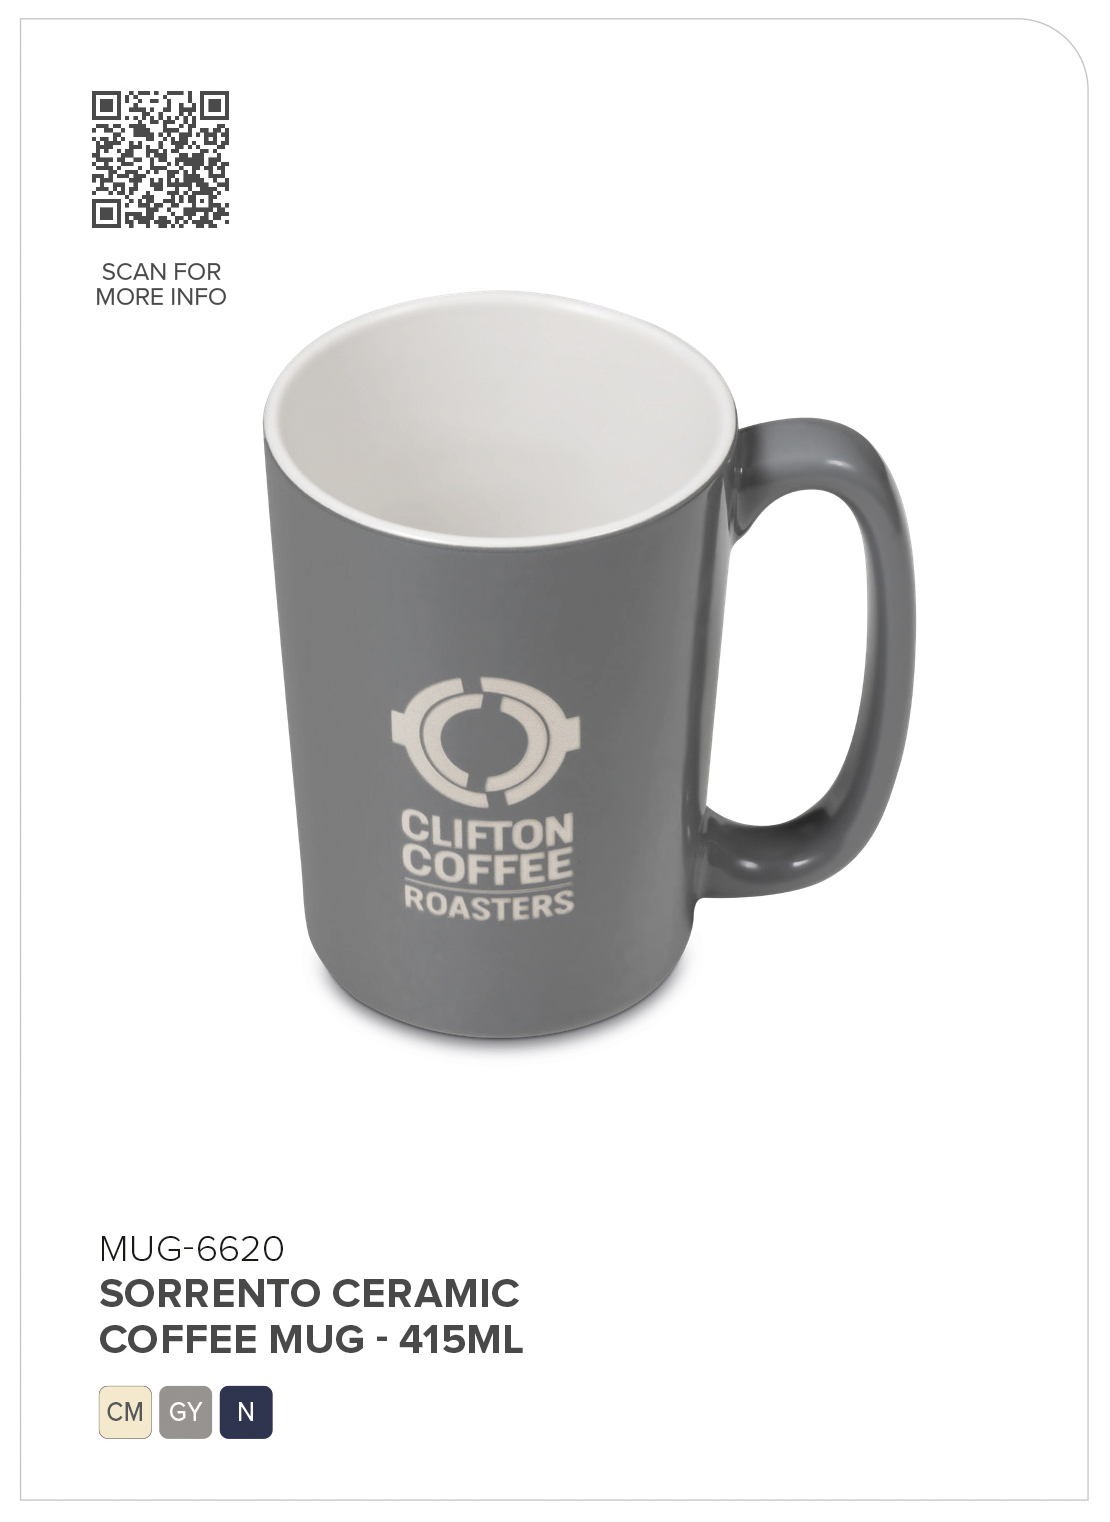 Sorrento Ceramic Coffee Mug - 415ml